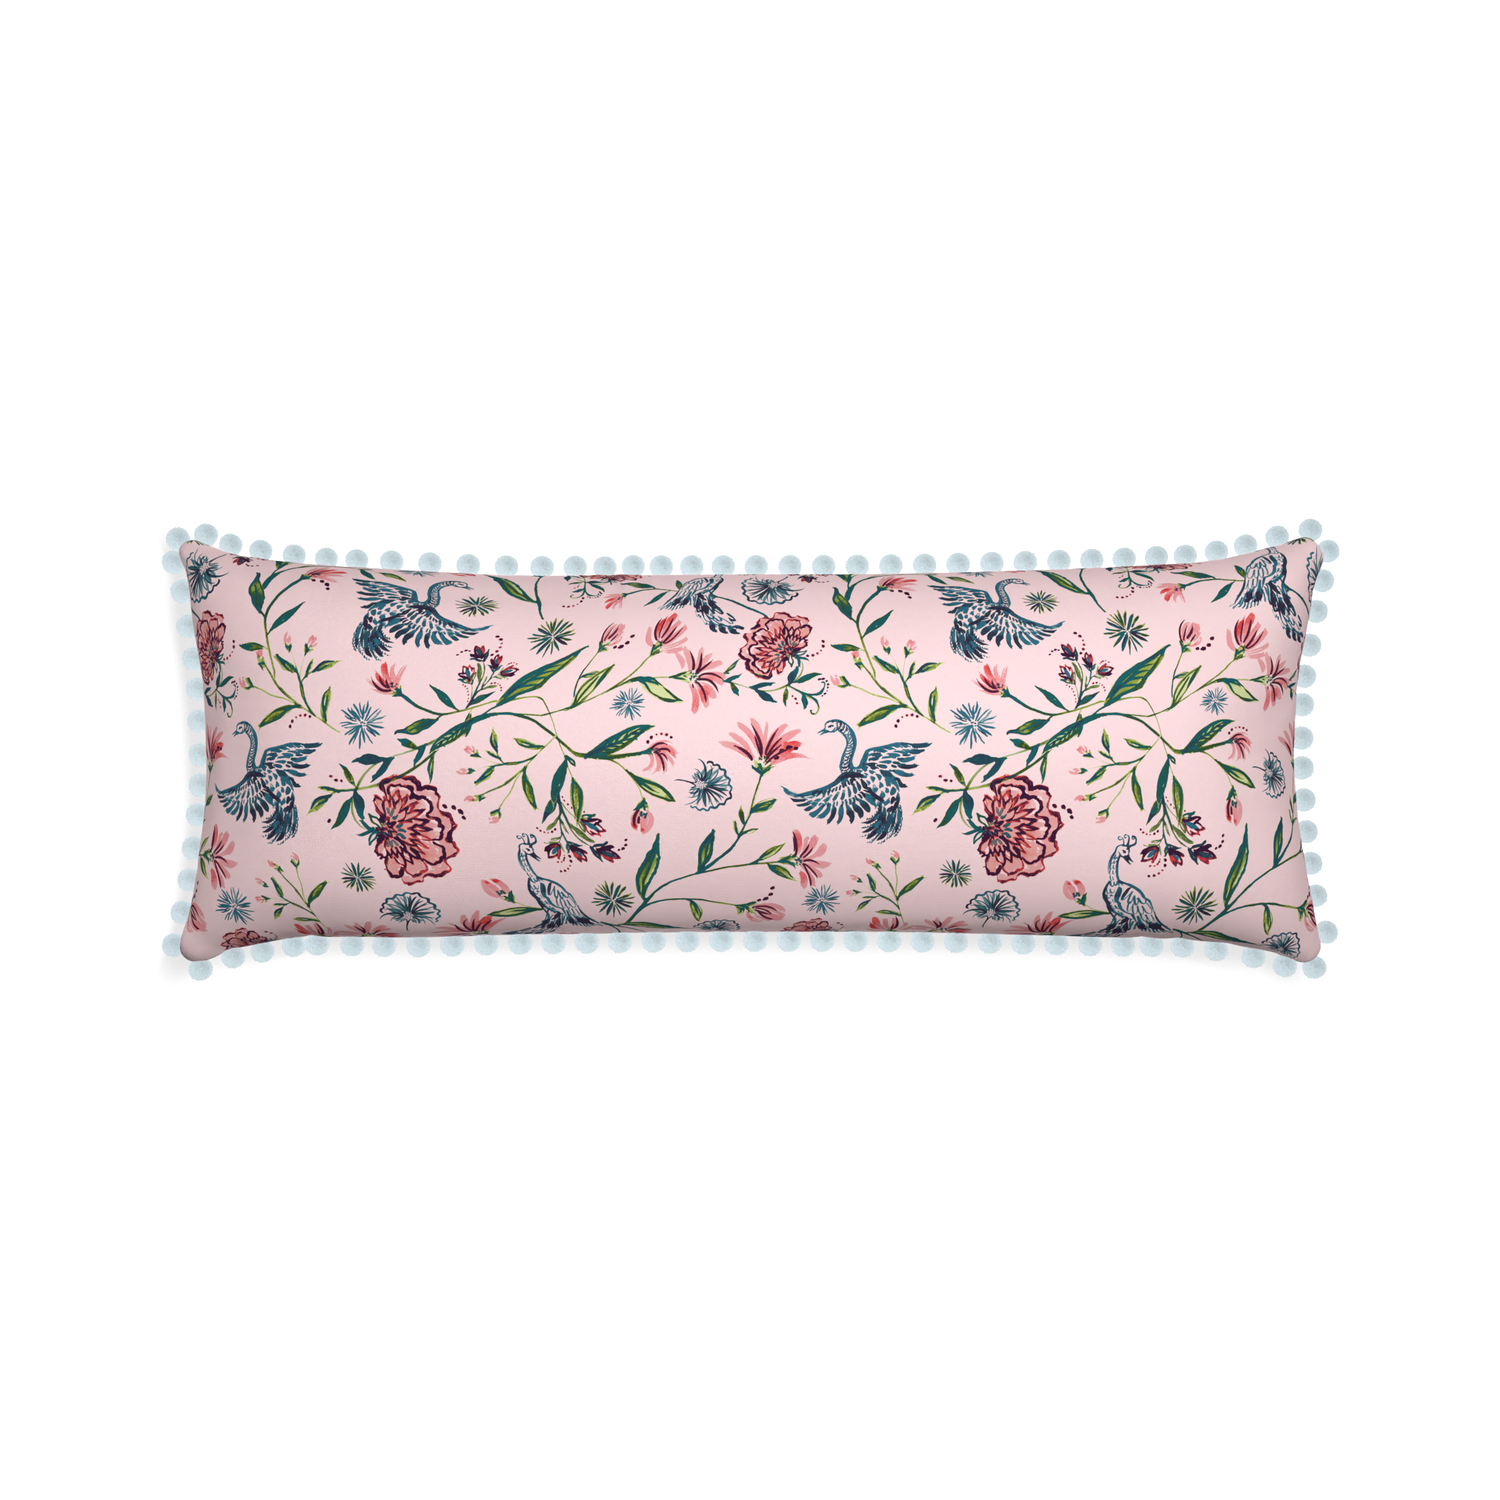 Xl-lumbar daphne rose custom pillow with powder pom pom on white background